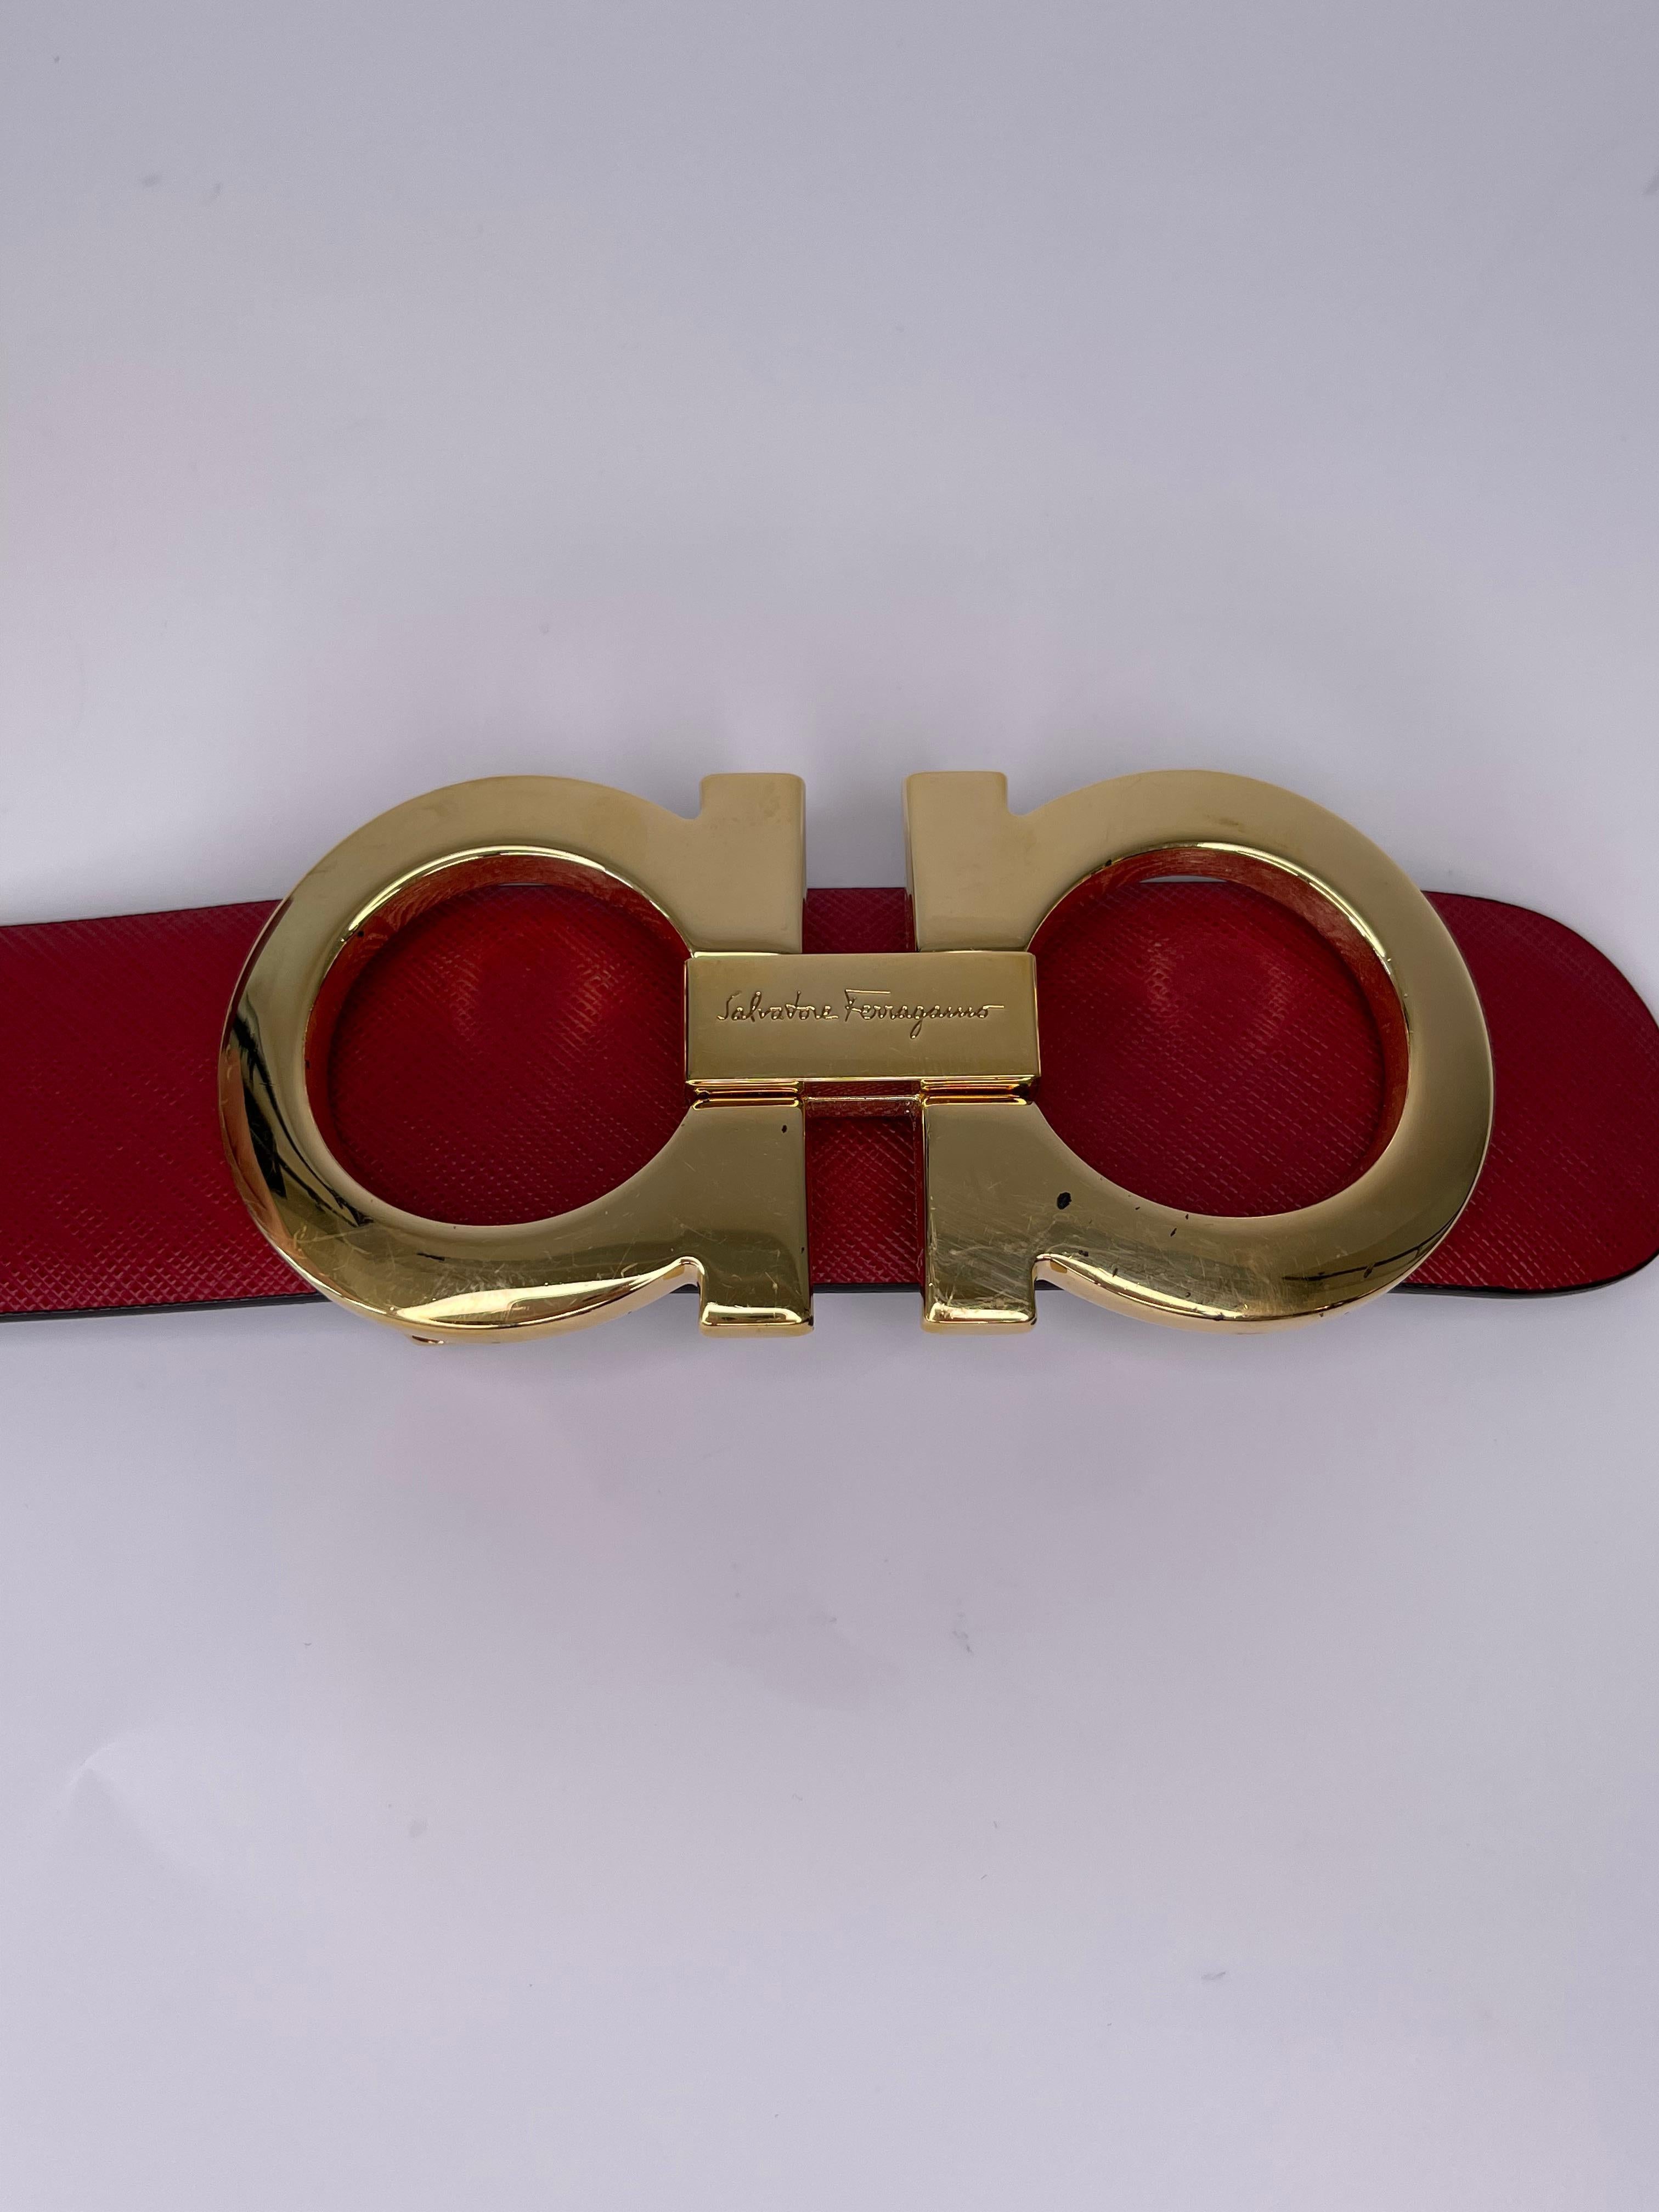 ferragamo belt red and gold